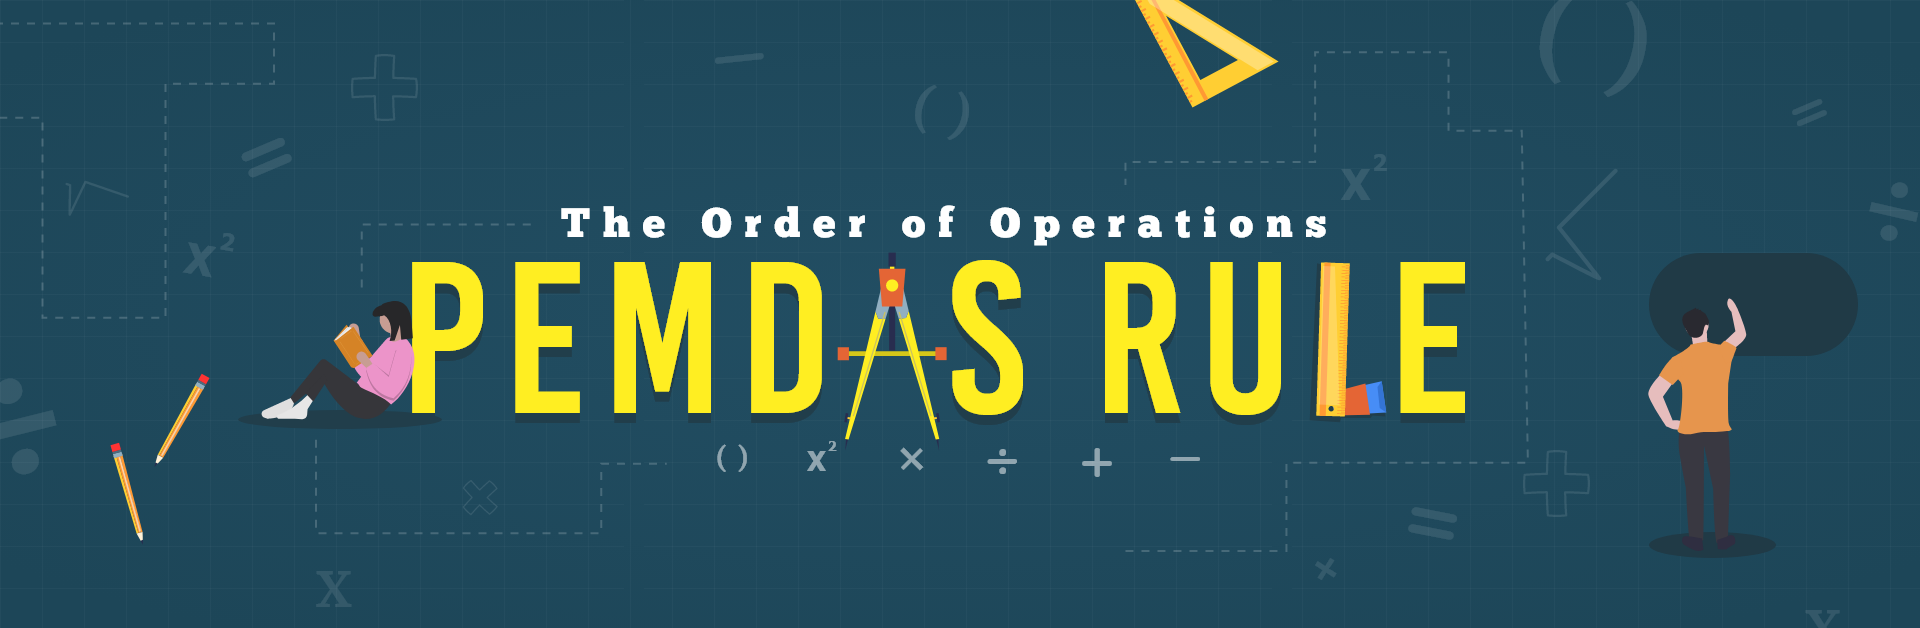 The Order of Operations: PEMDAS Rule